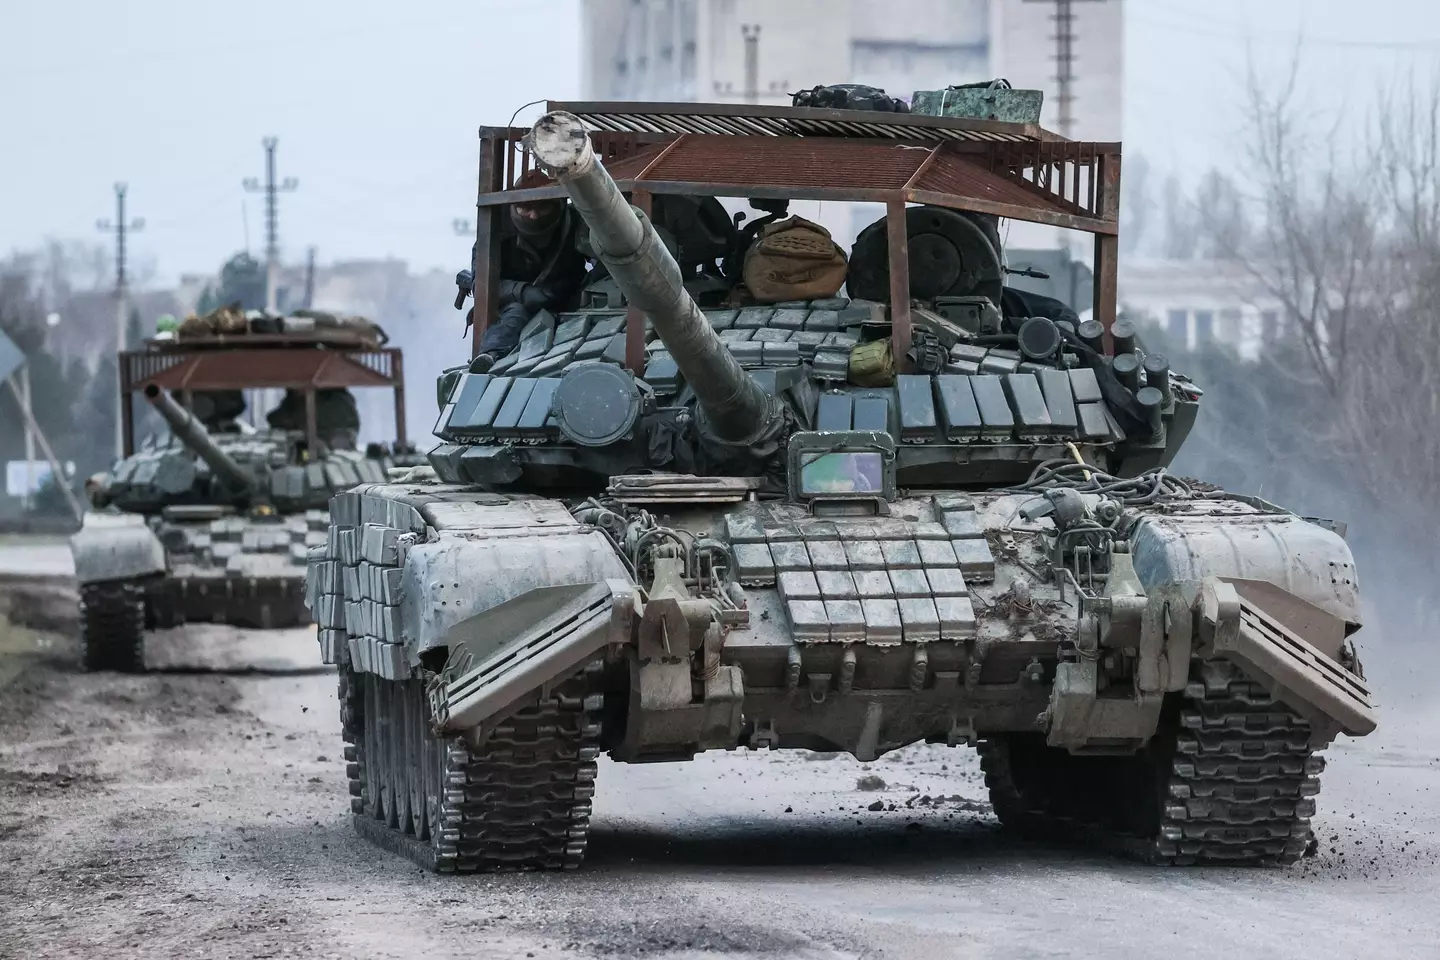 Russian tanks have entered Ukraine.